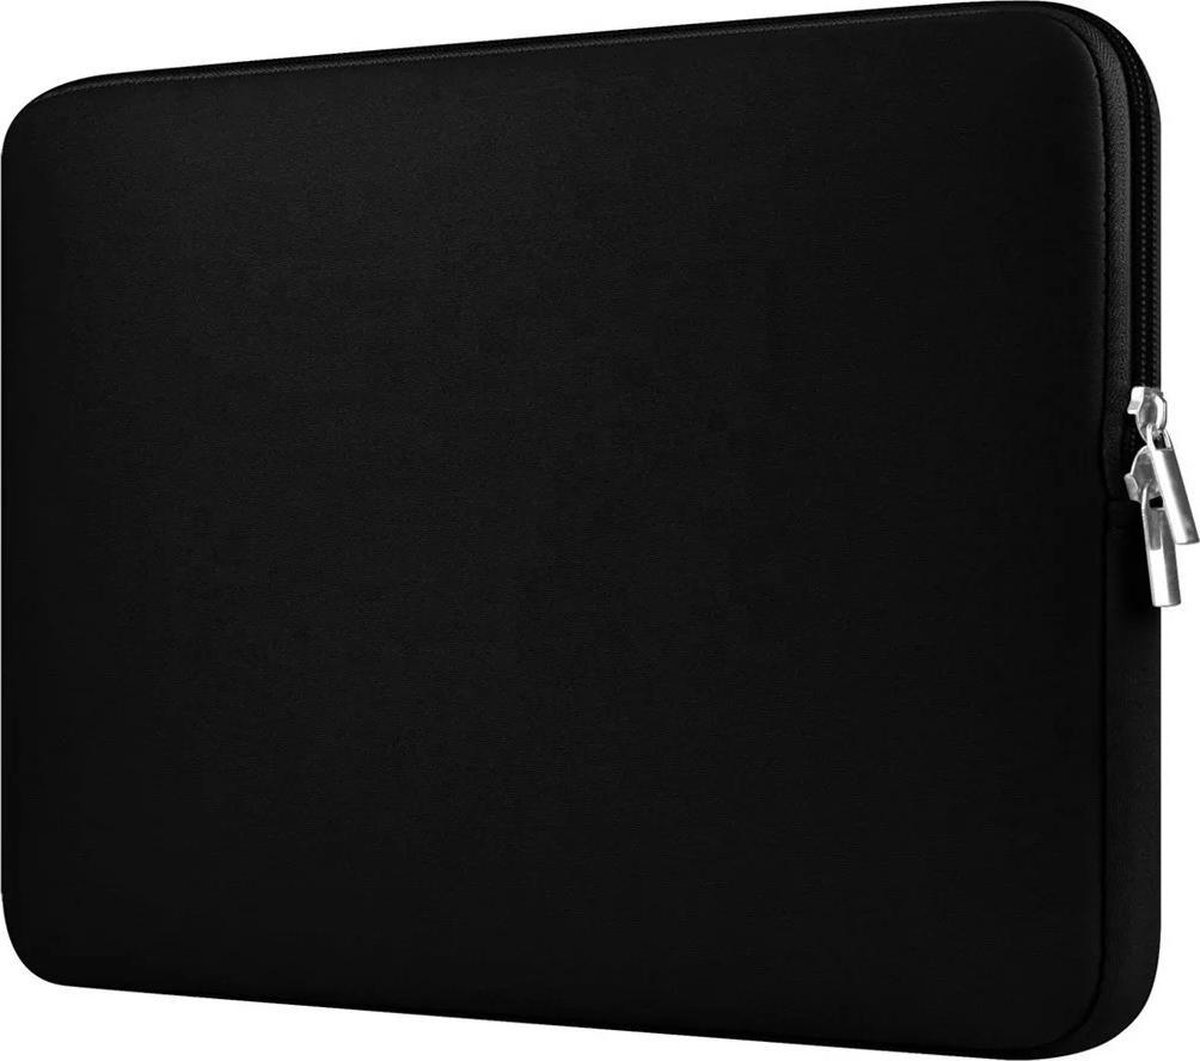 Spatwaterdichte laptopsleeve – 14,6 inch - dubbele ritssluiting- zwarte kleur - unisex - spatwaterbestending